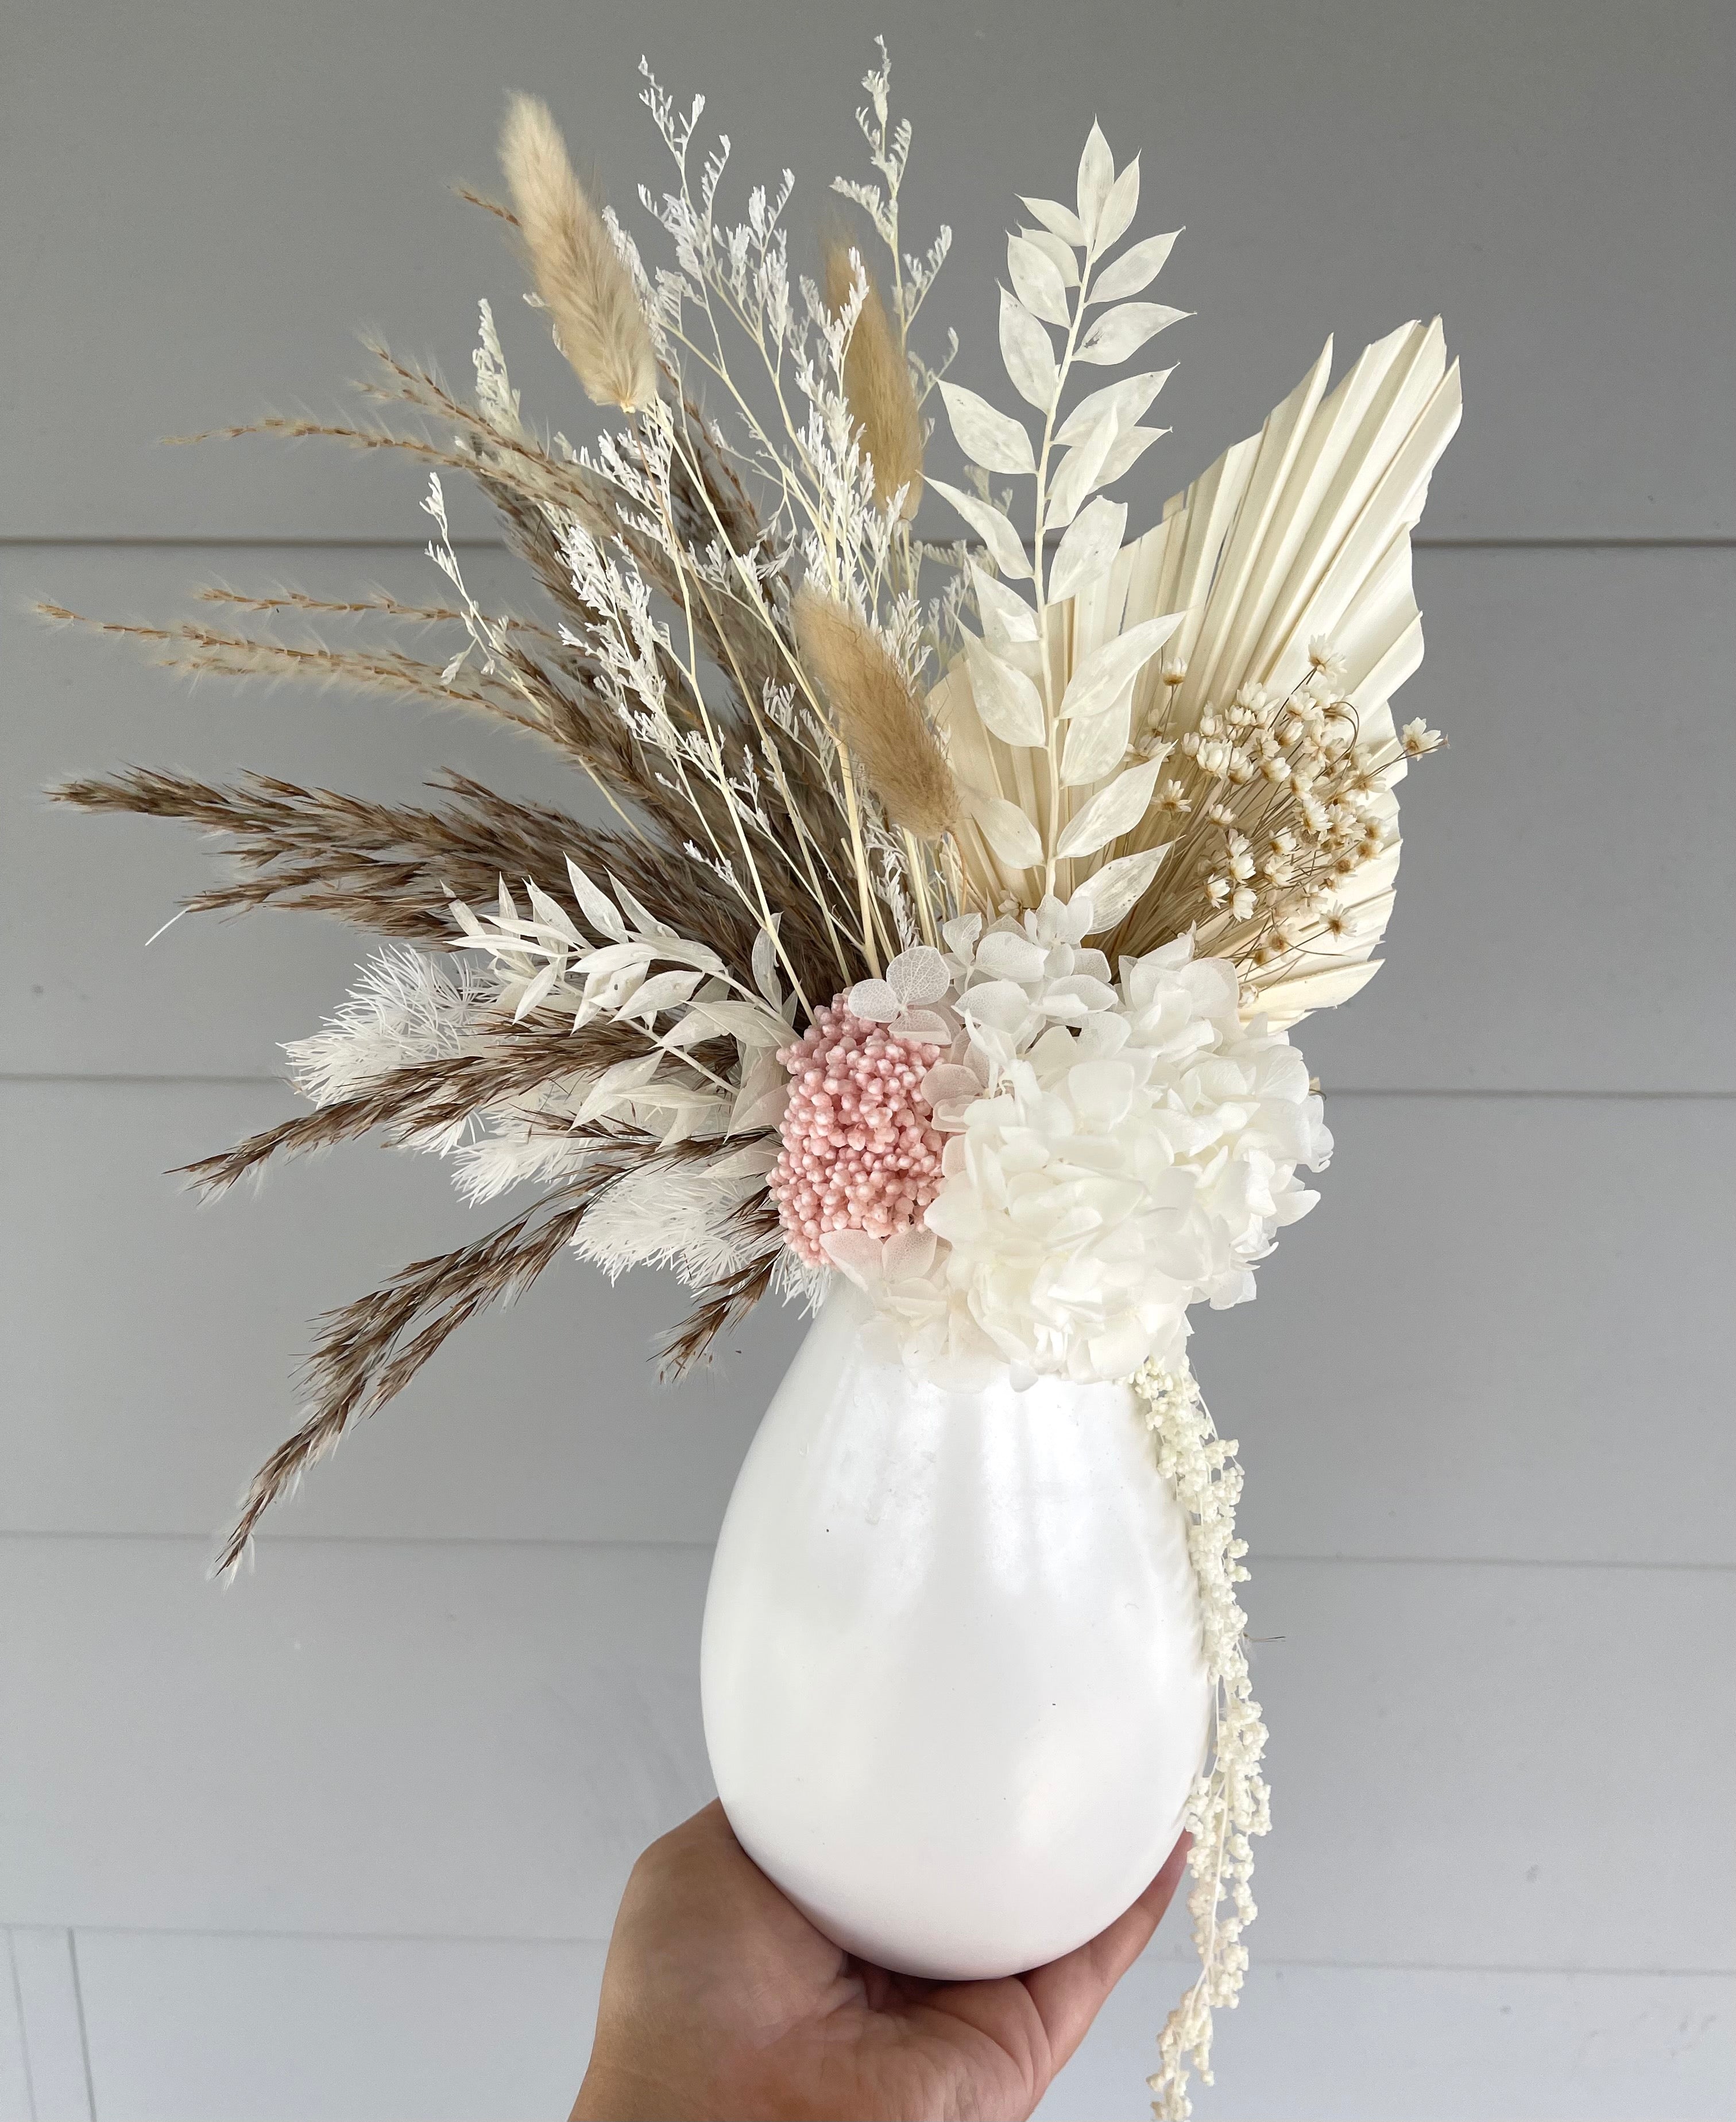 Everlasting vase arrangement - small -white/natural/light pink.